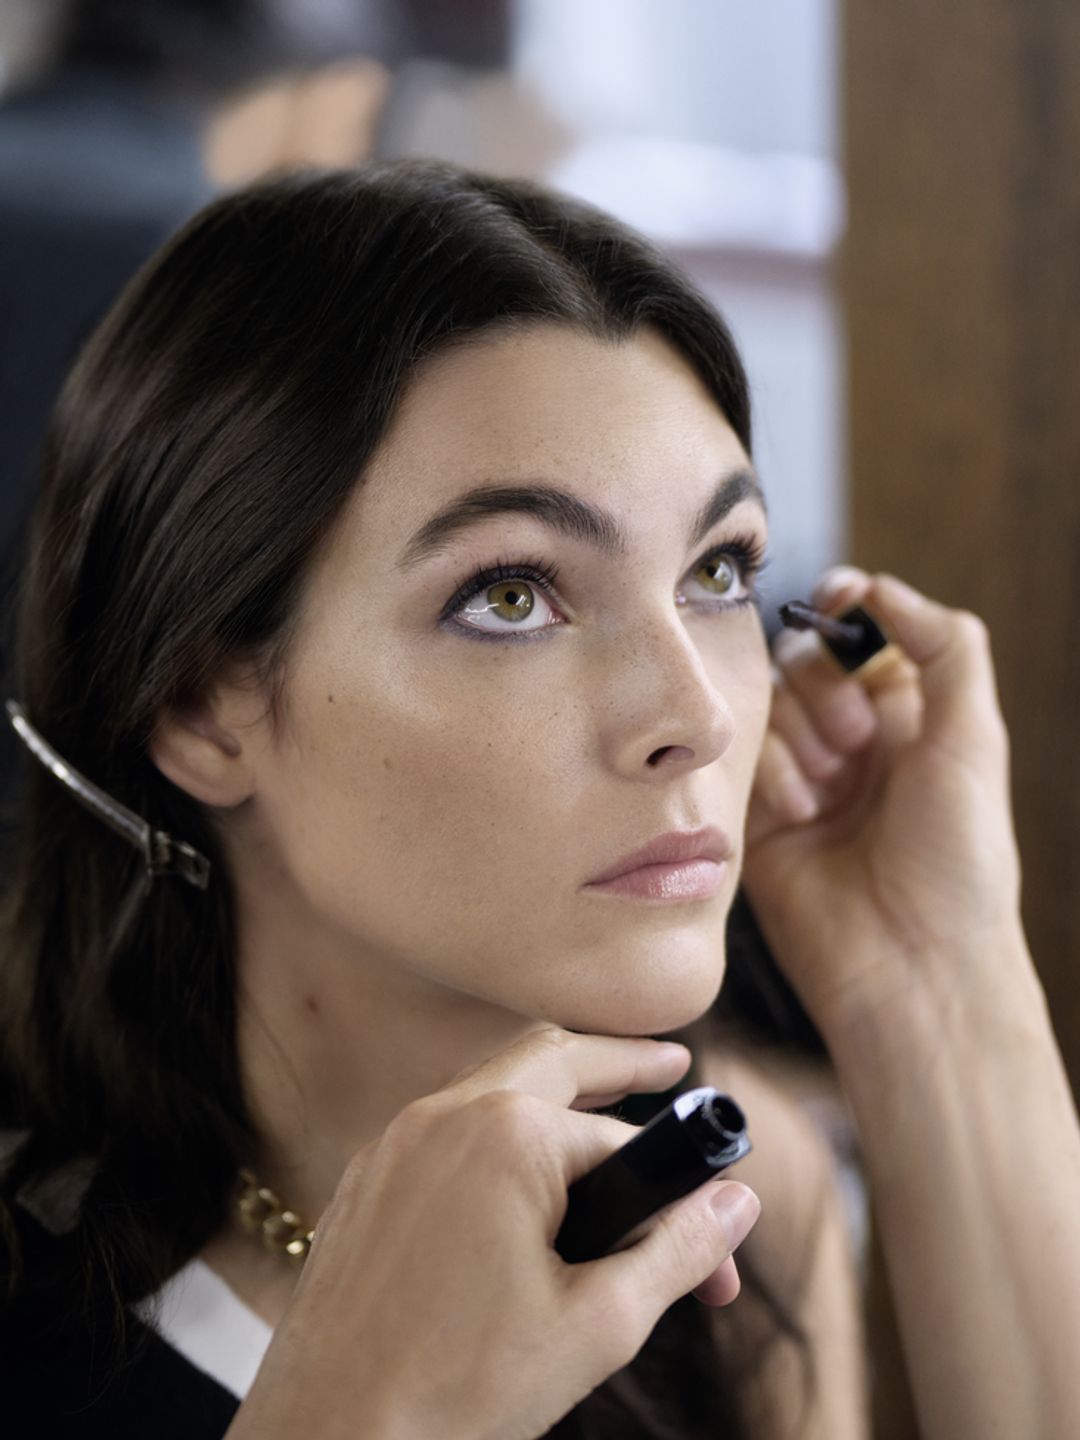 Chanel model having her mascara applied 